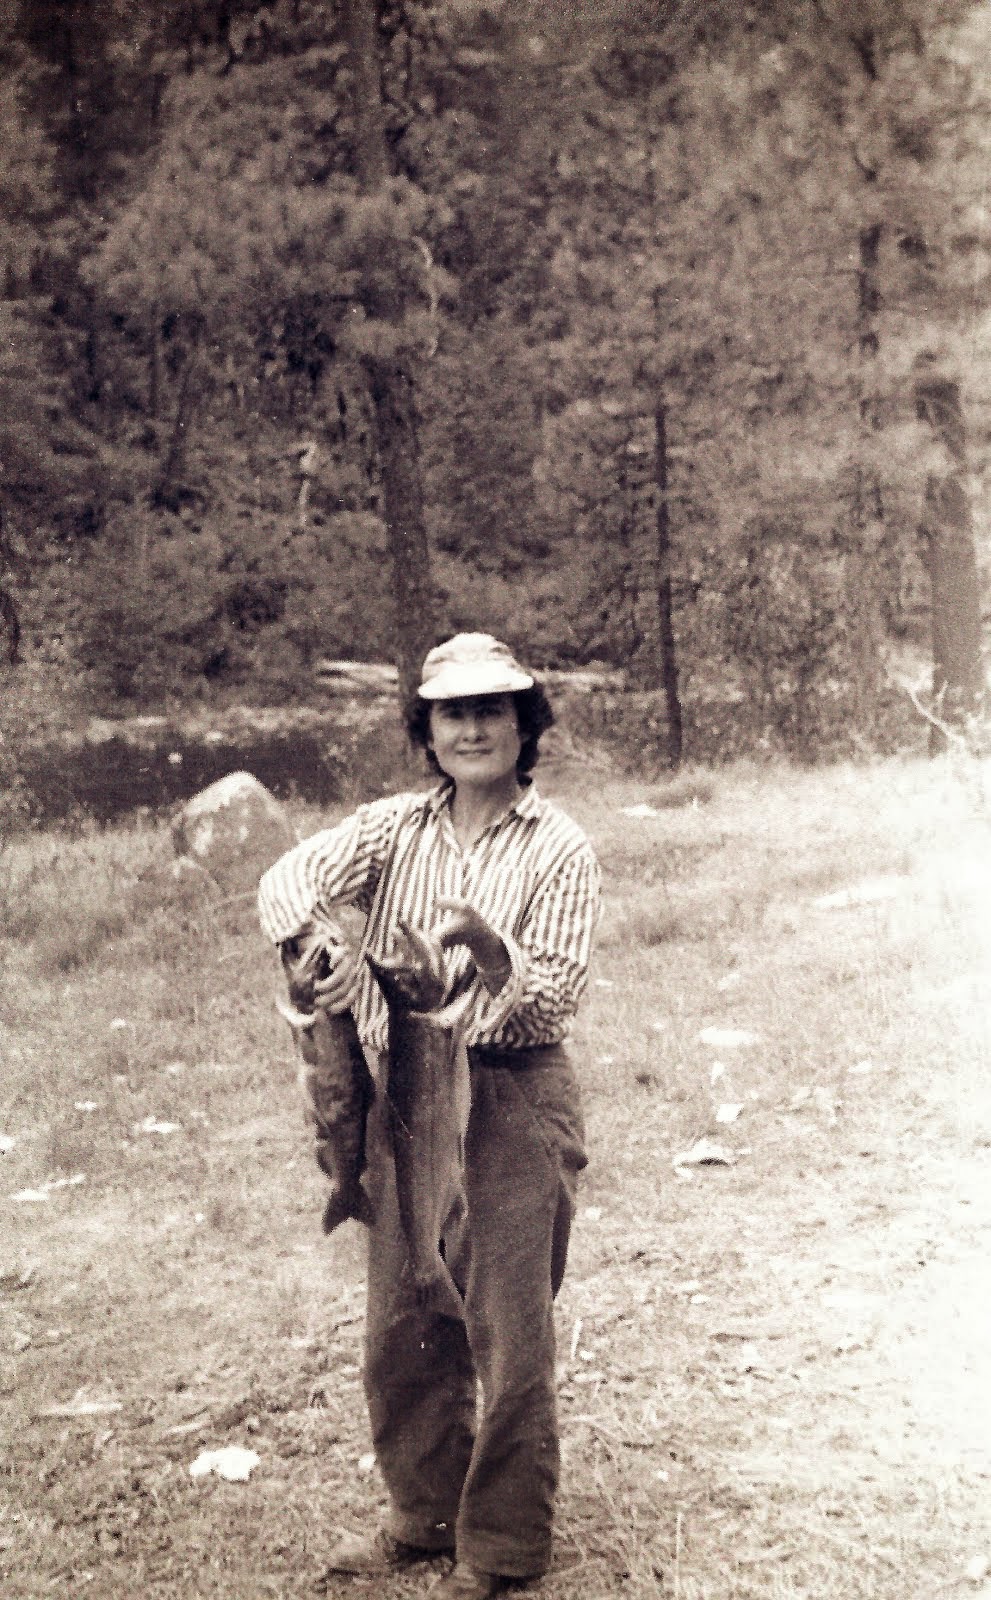 Frances loved fishing